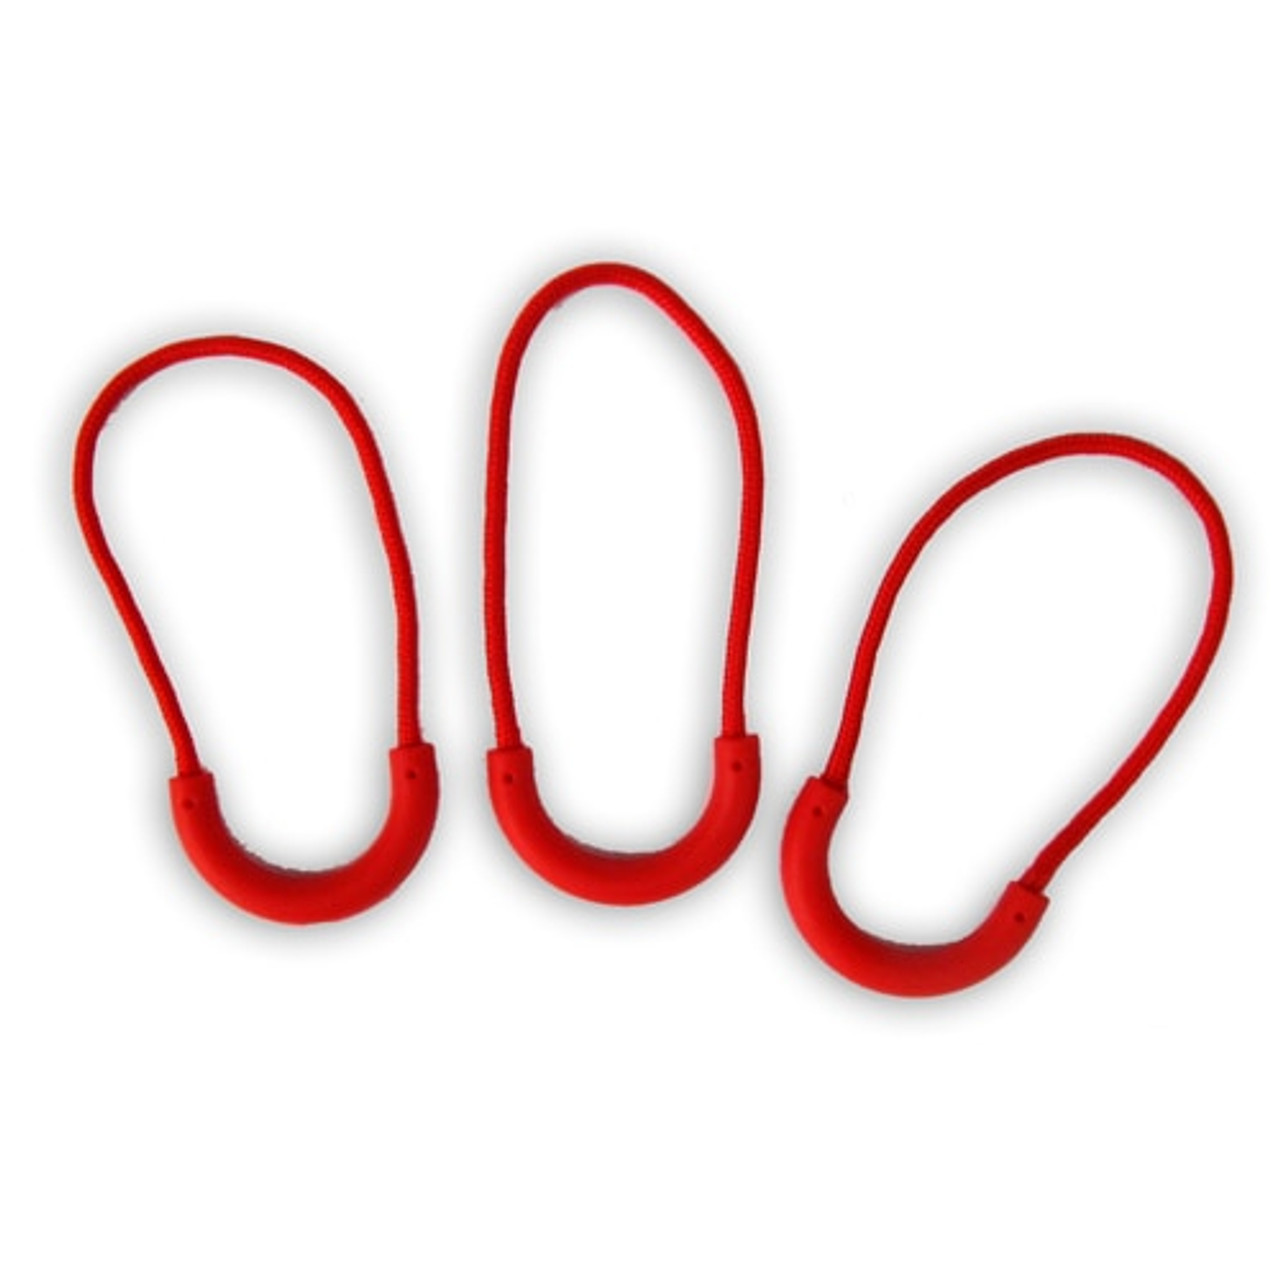 Zipper Pull-Red Plastic Loop - 3 Pack